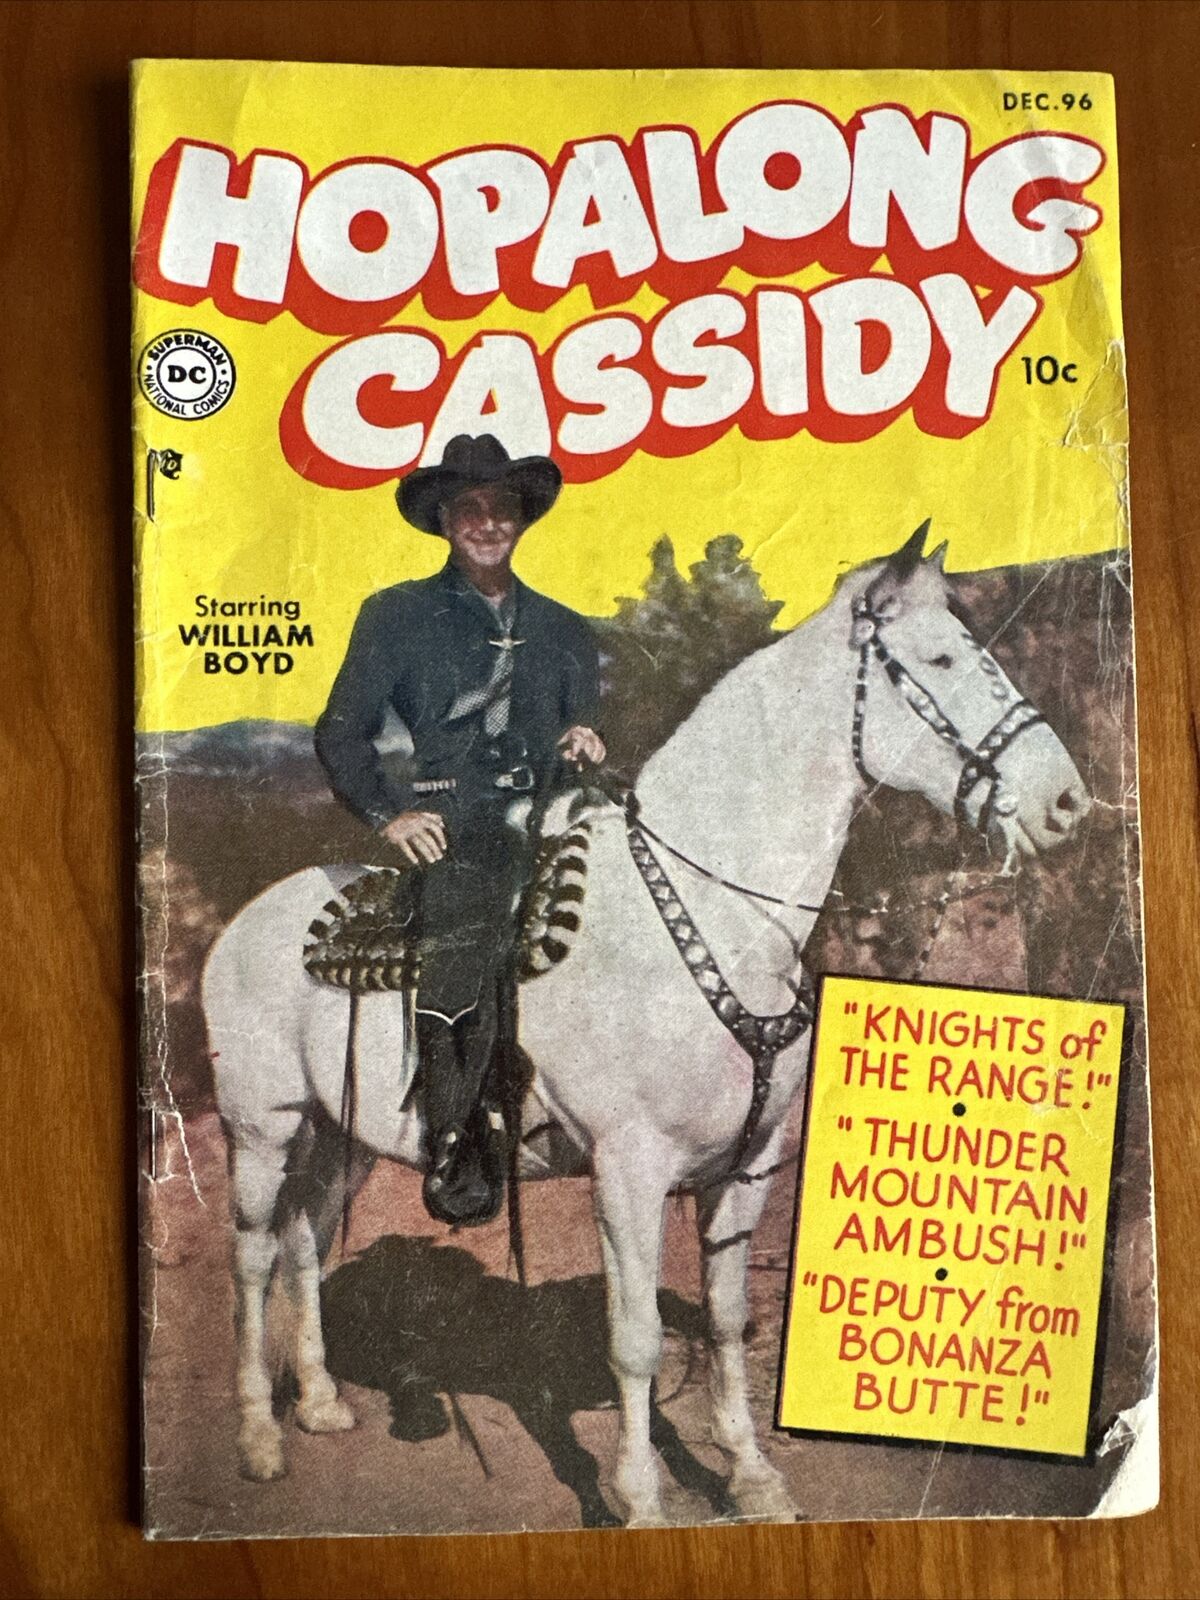 hopalong cassidy Comic Book Dec. 96 Knights Of The Range William Boyd DC Comics